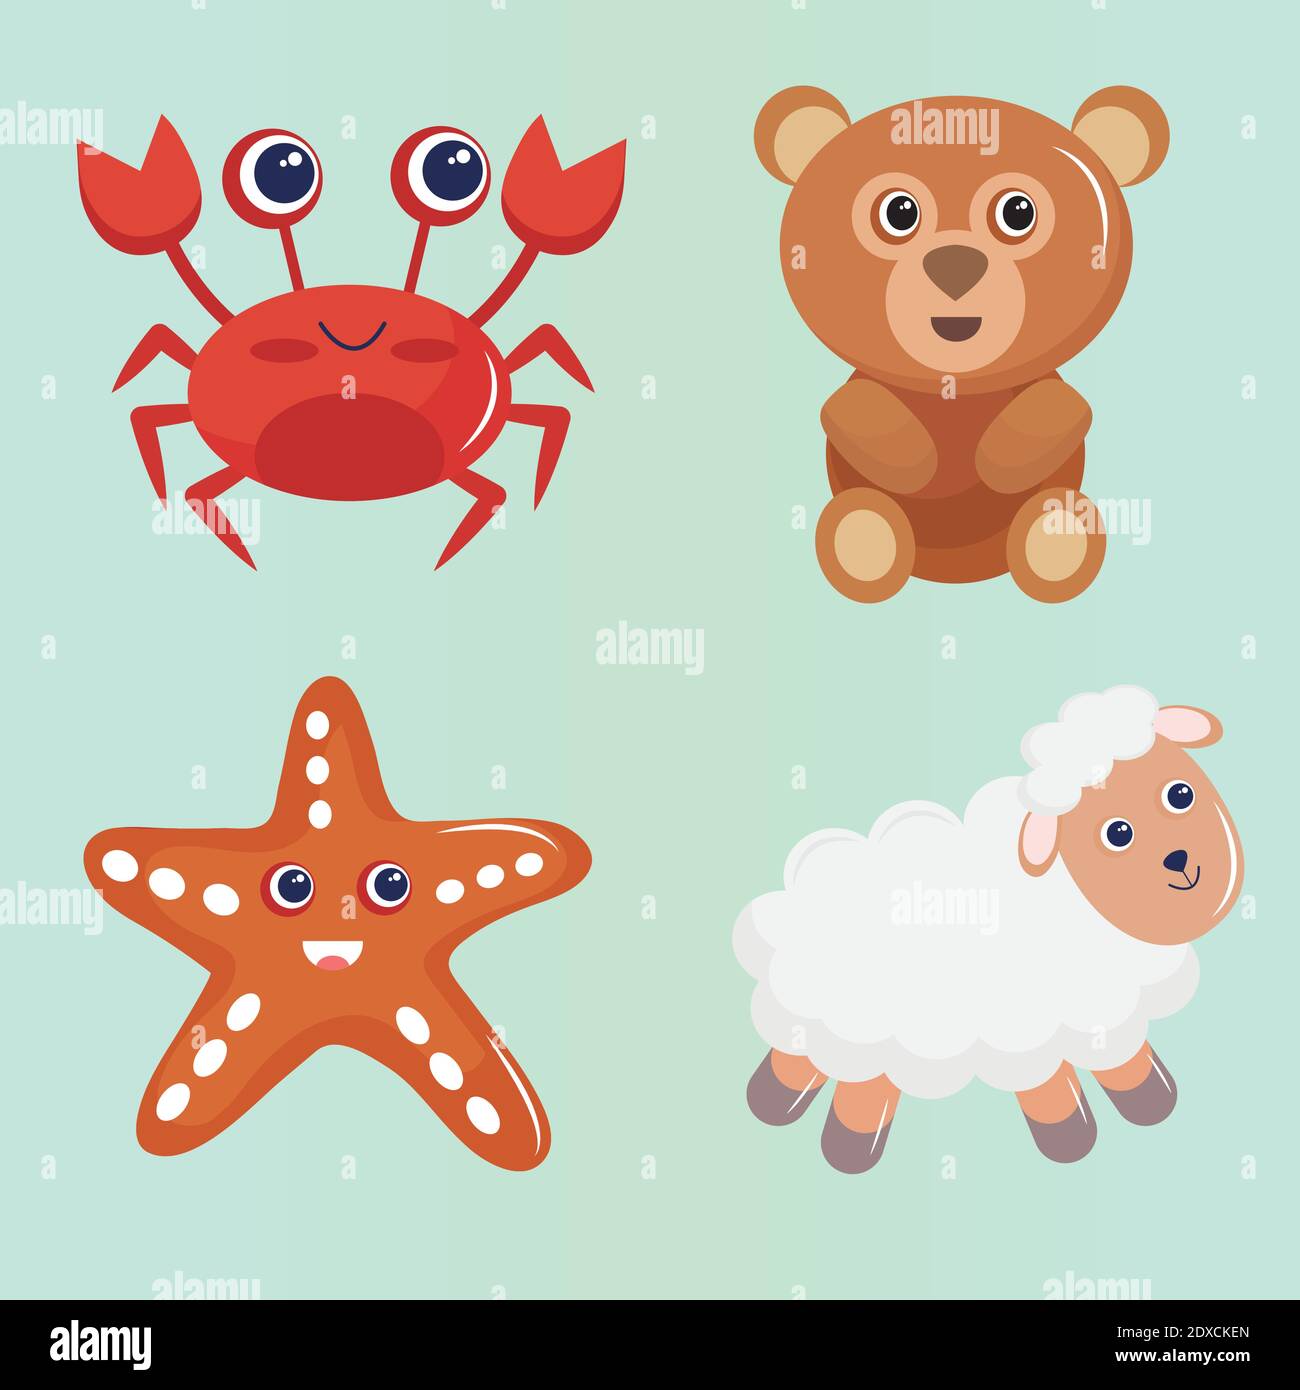 bundle of four cute animals kawaii characters Stock Vector